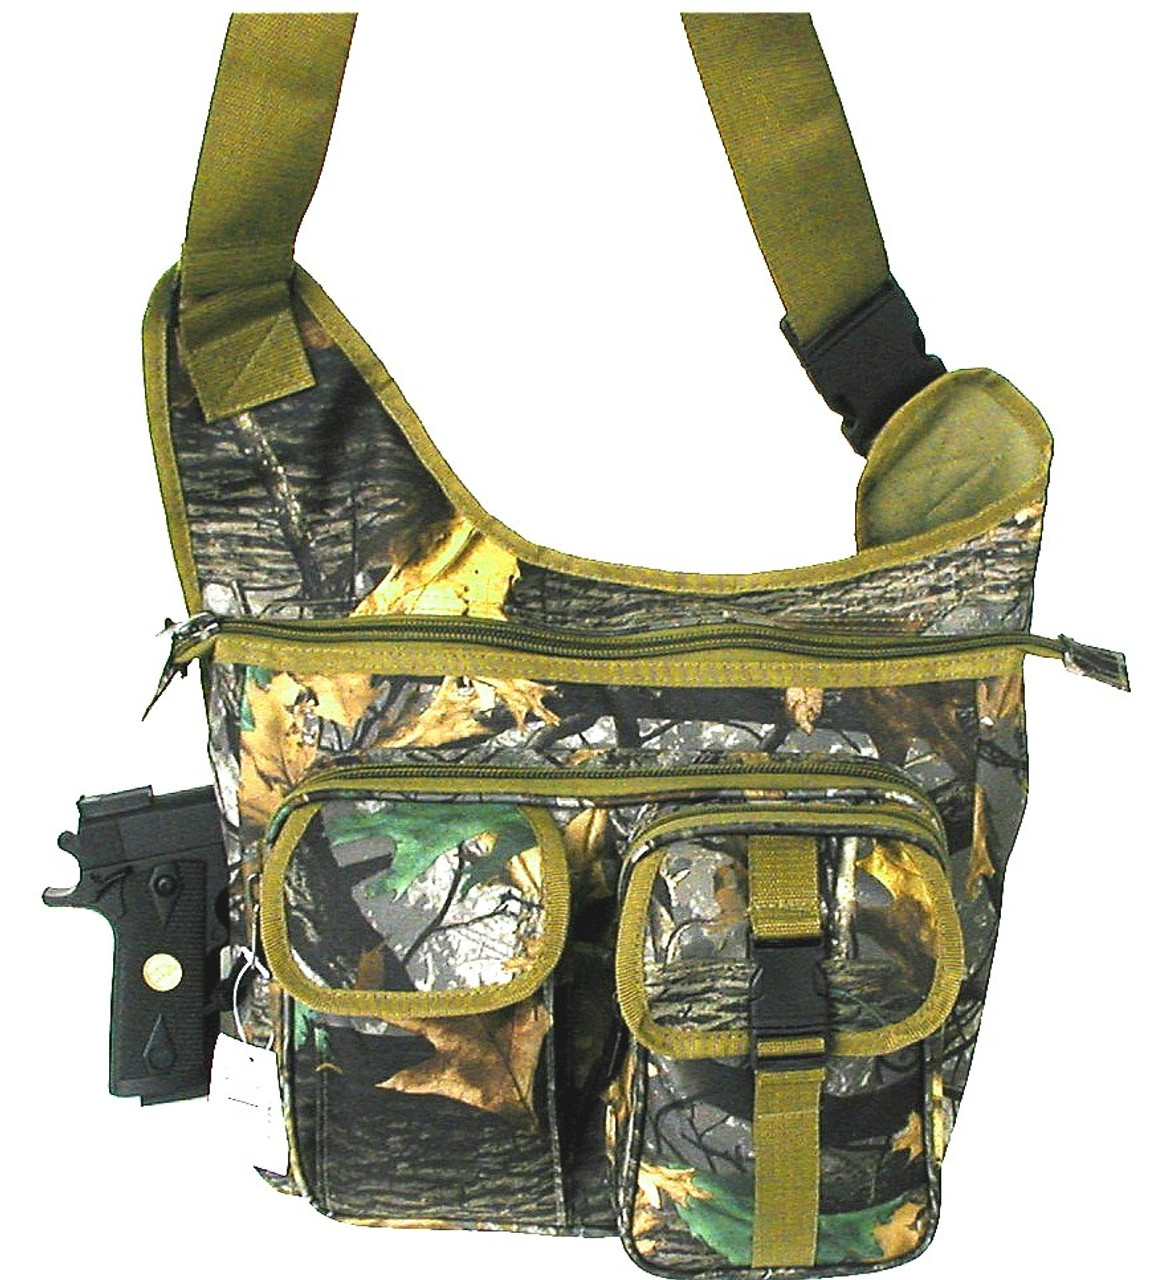 Explorer Wildland -Realtree Like- Hunting Camo Multi-Functional Tactical Messenger Bag - Documents Bag- Multiple Pocket & Compartments